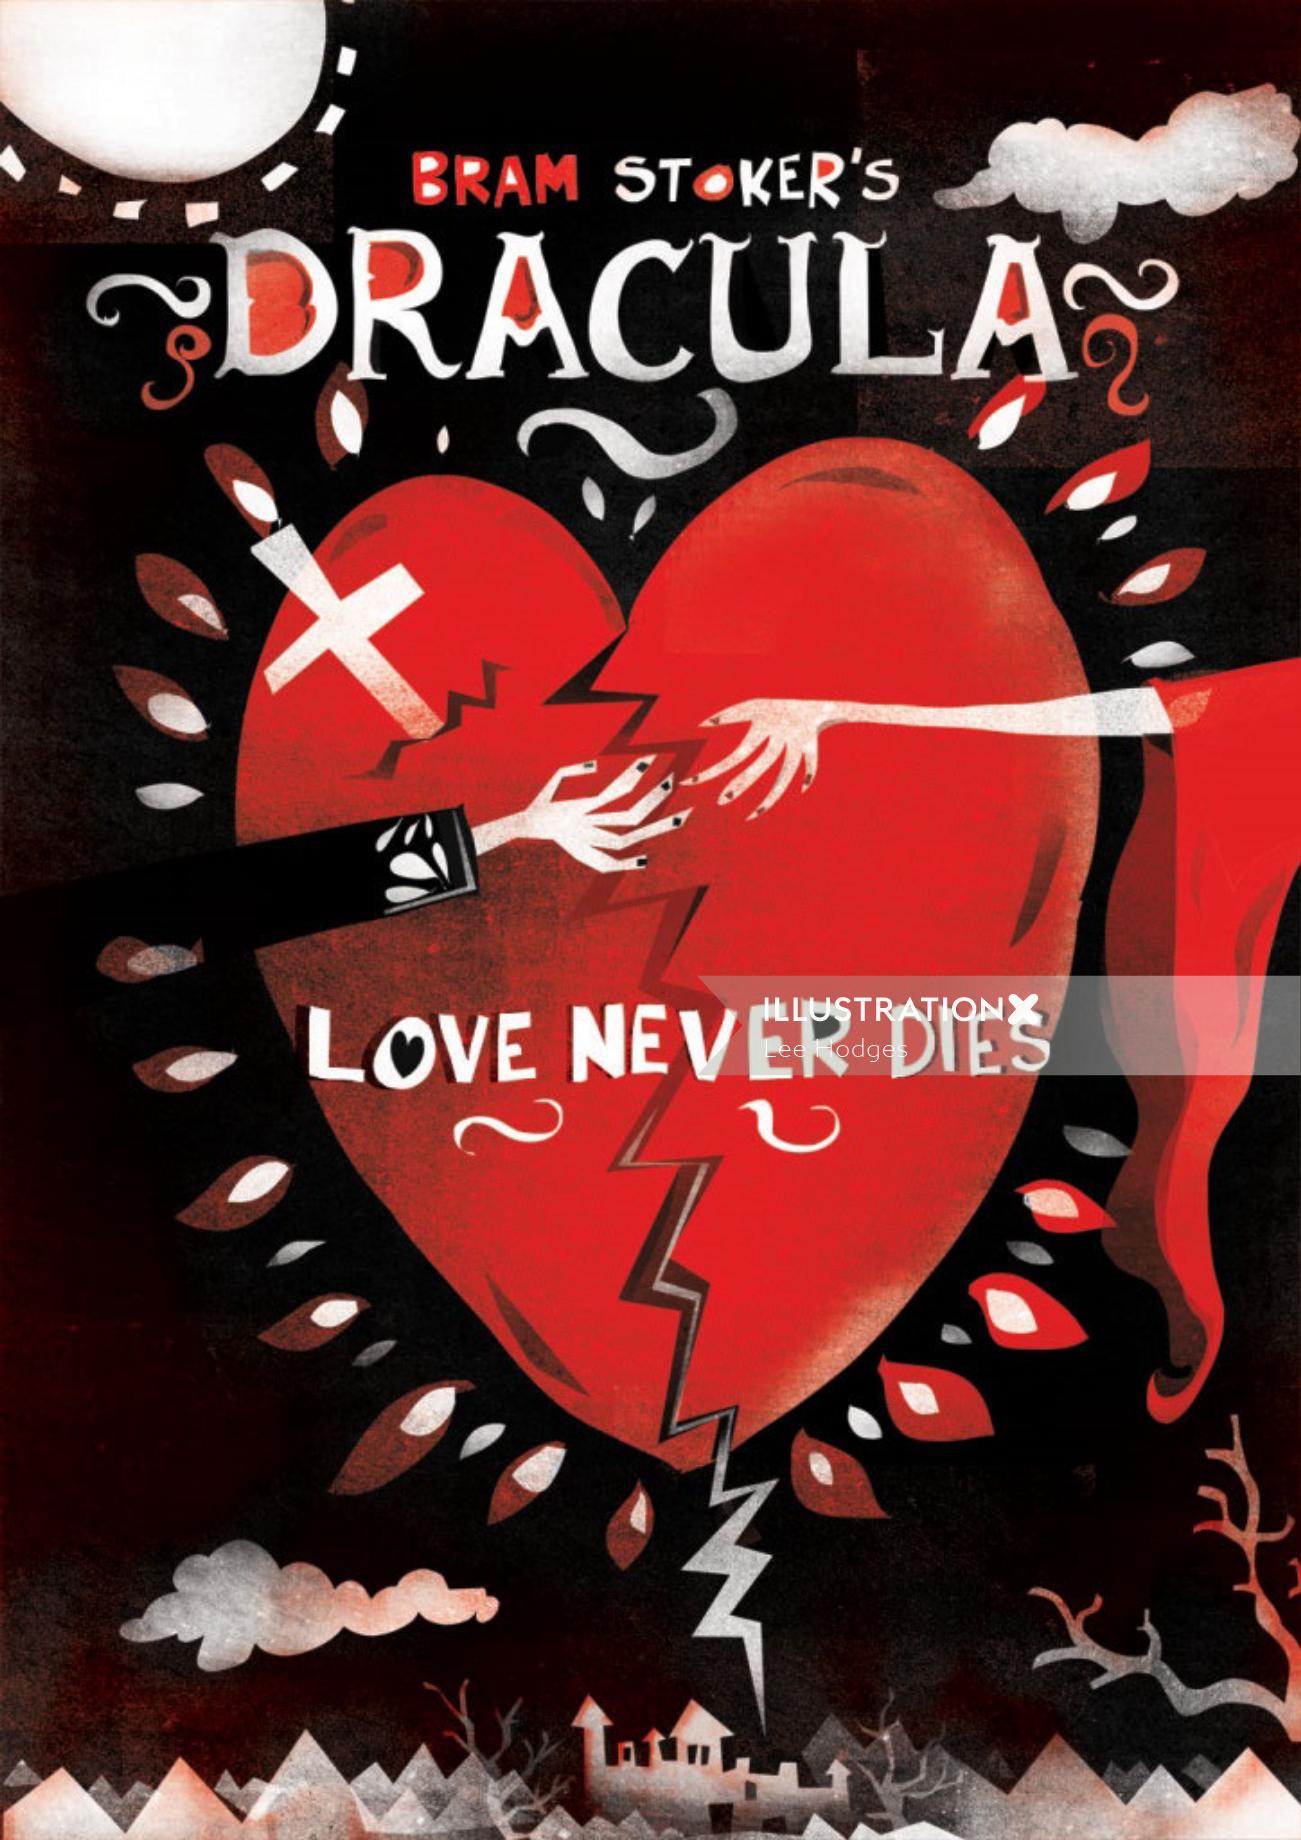 由 Lee Hodges 设计的 Bram Stoker 的 Dracula 海报